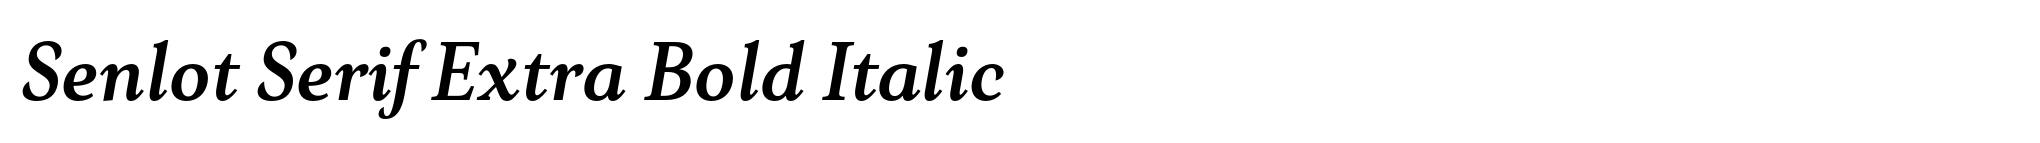 Senlot Serif Extra Bold Italic image